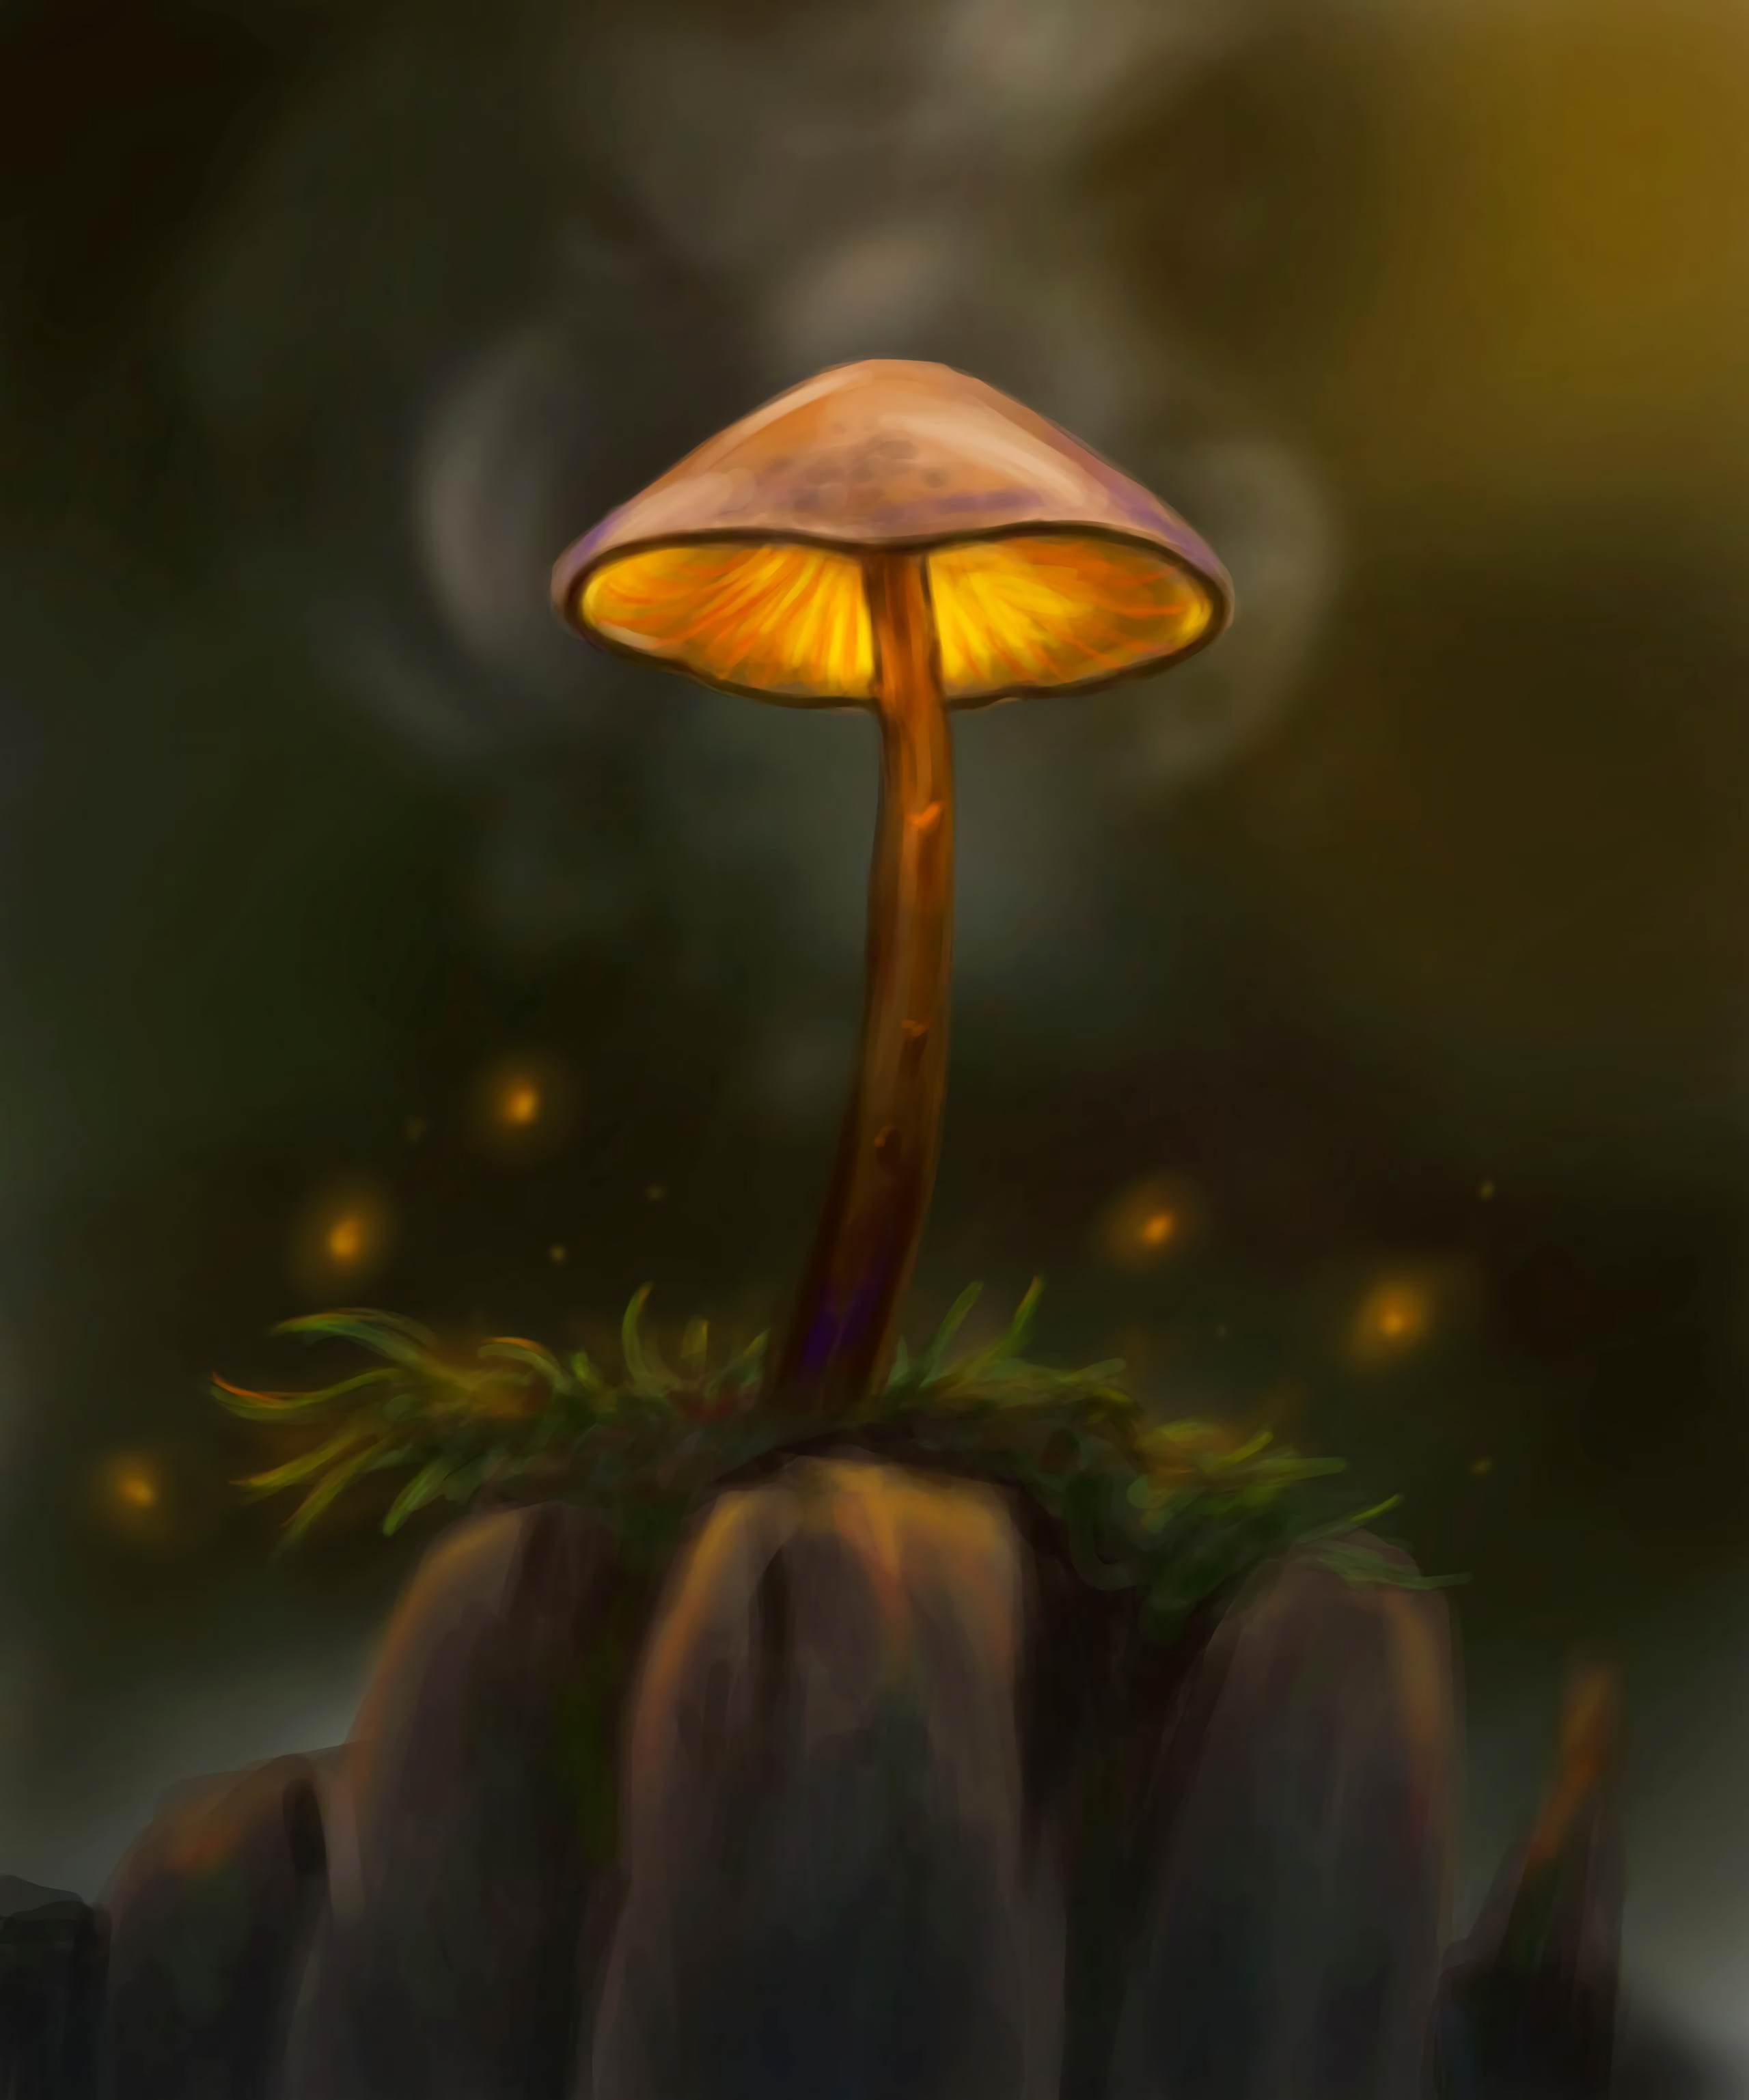 Mushroom Lock Screen Wallpaper